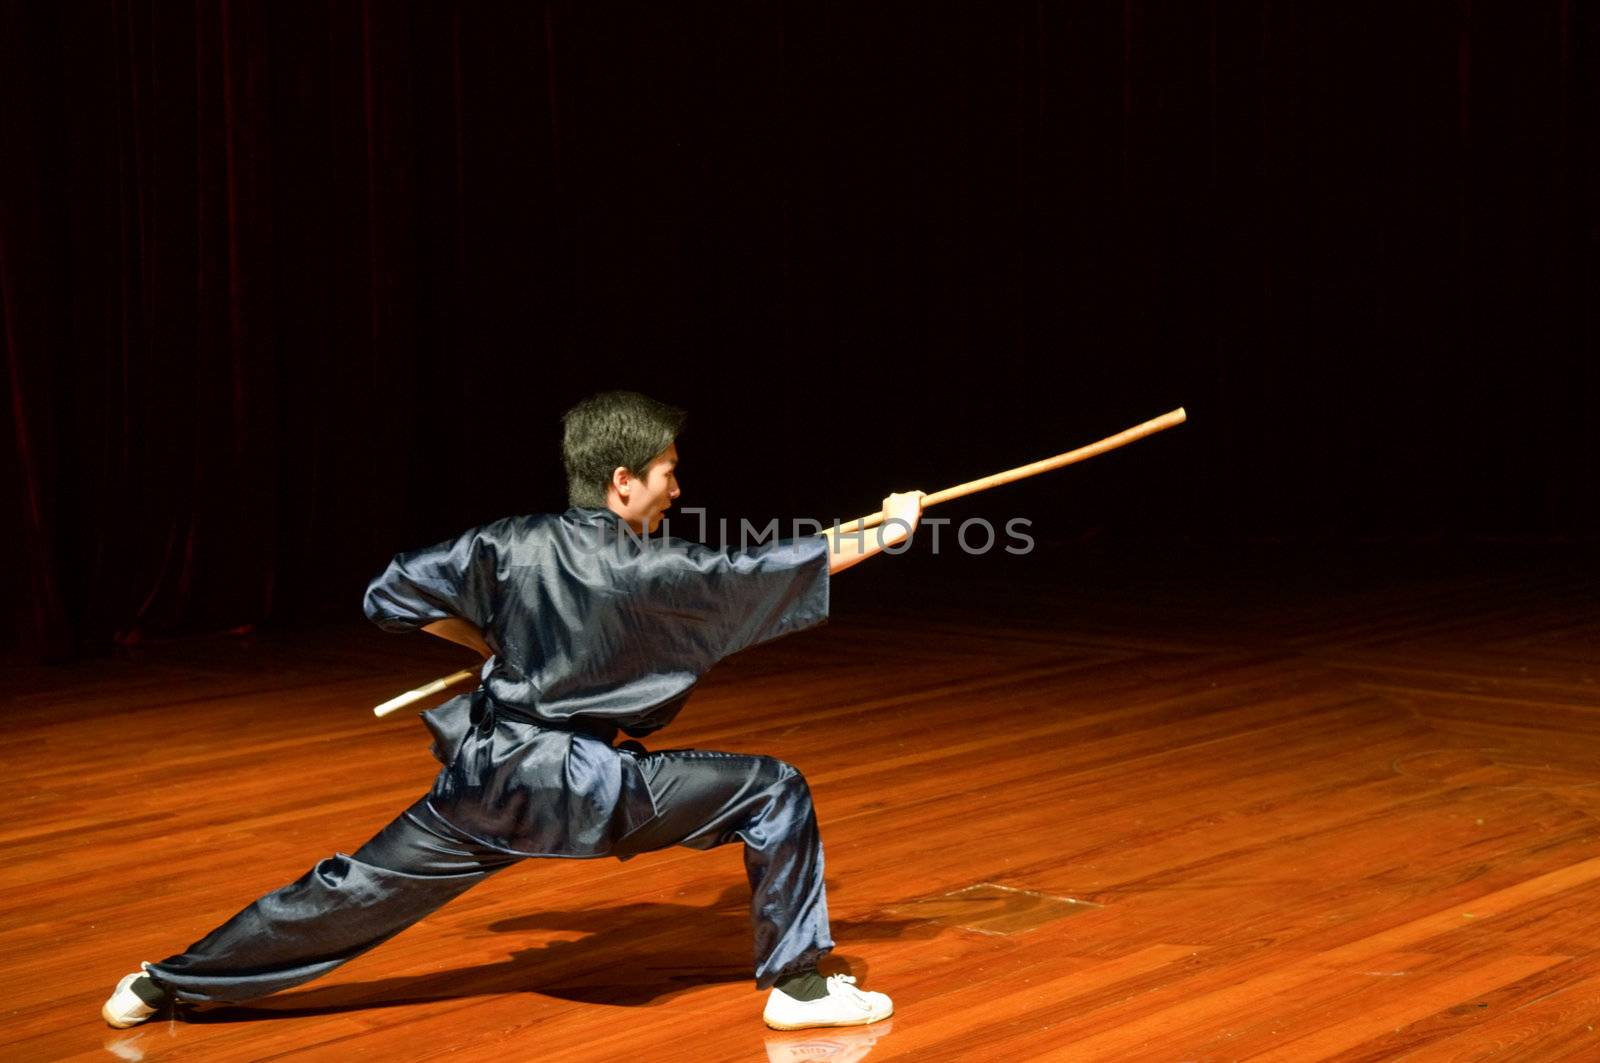 MACAU - APRIL 25: The man performing Chinese kung fu (wu shu), April 25, 2009, Macau